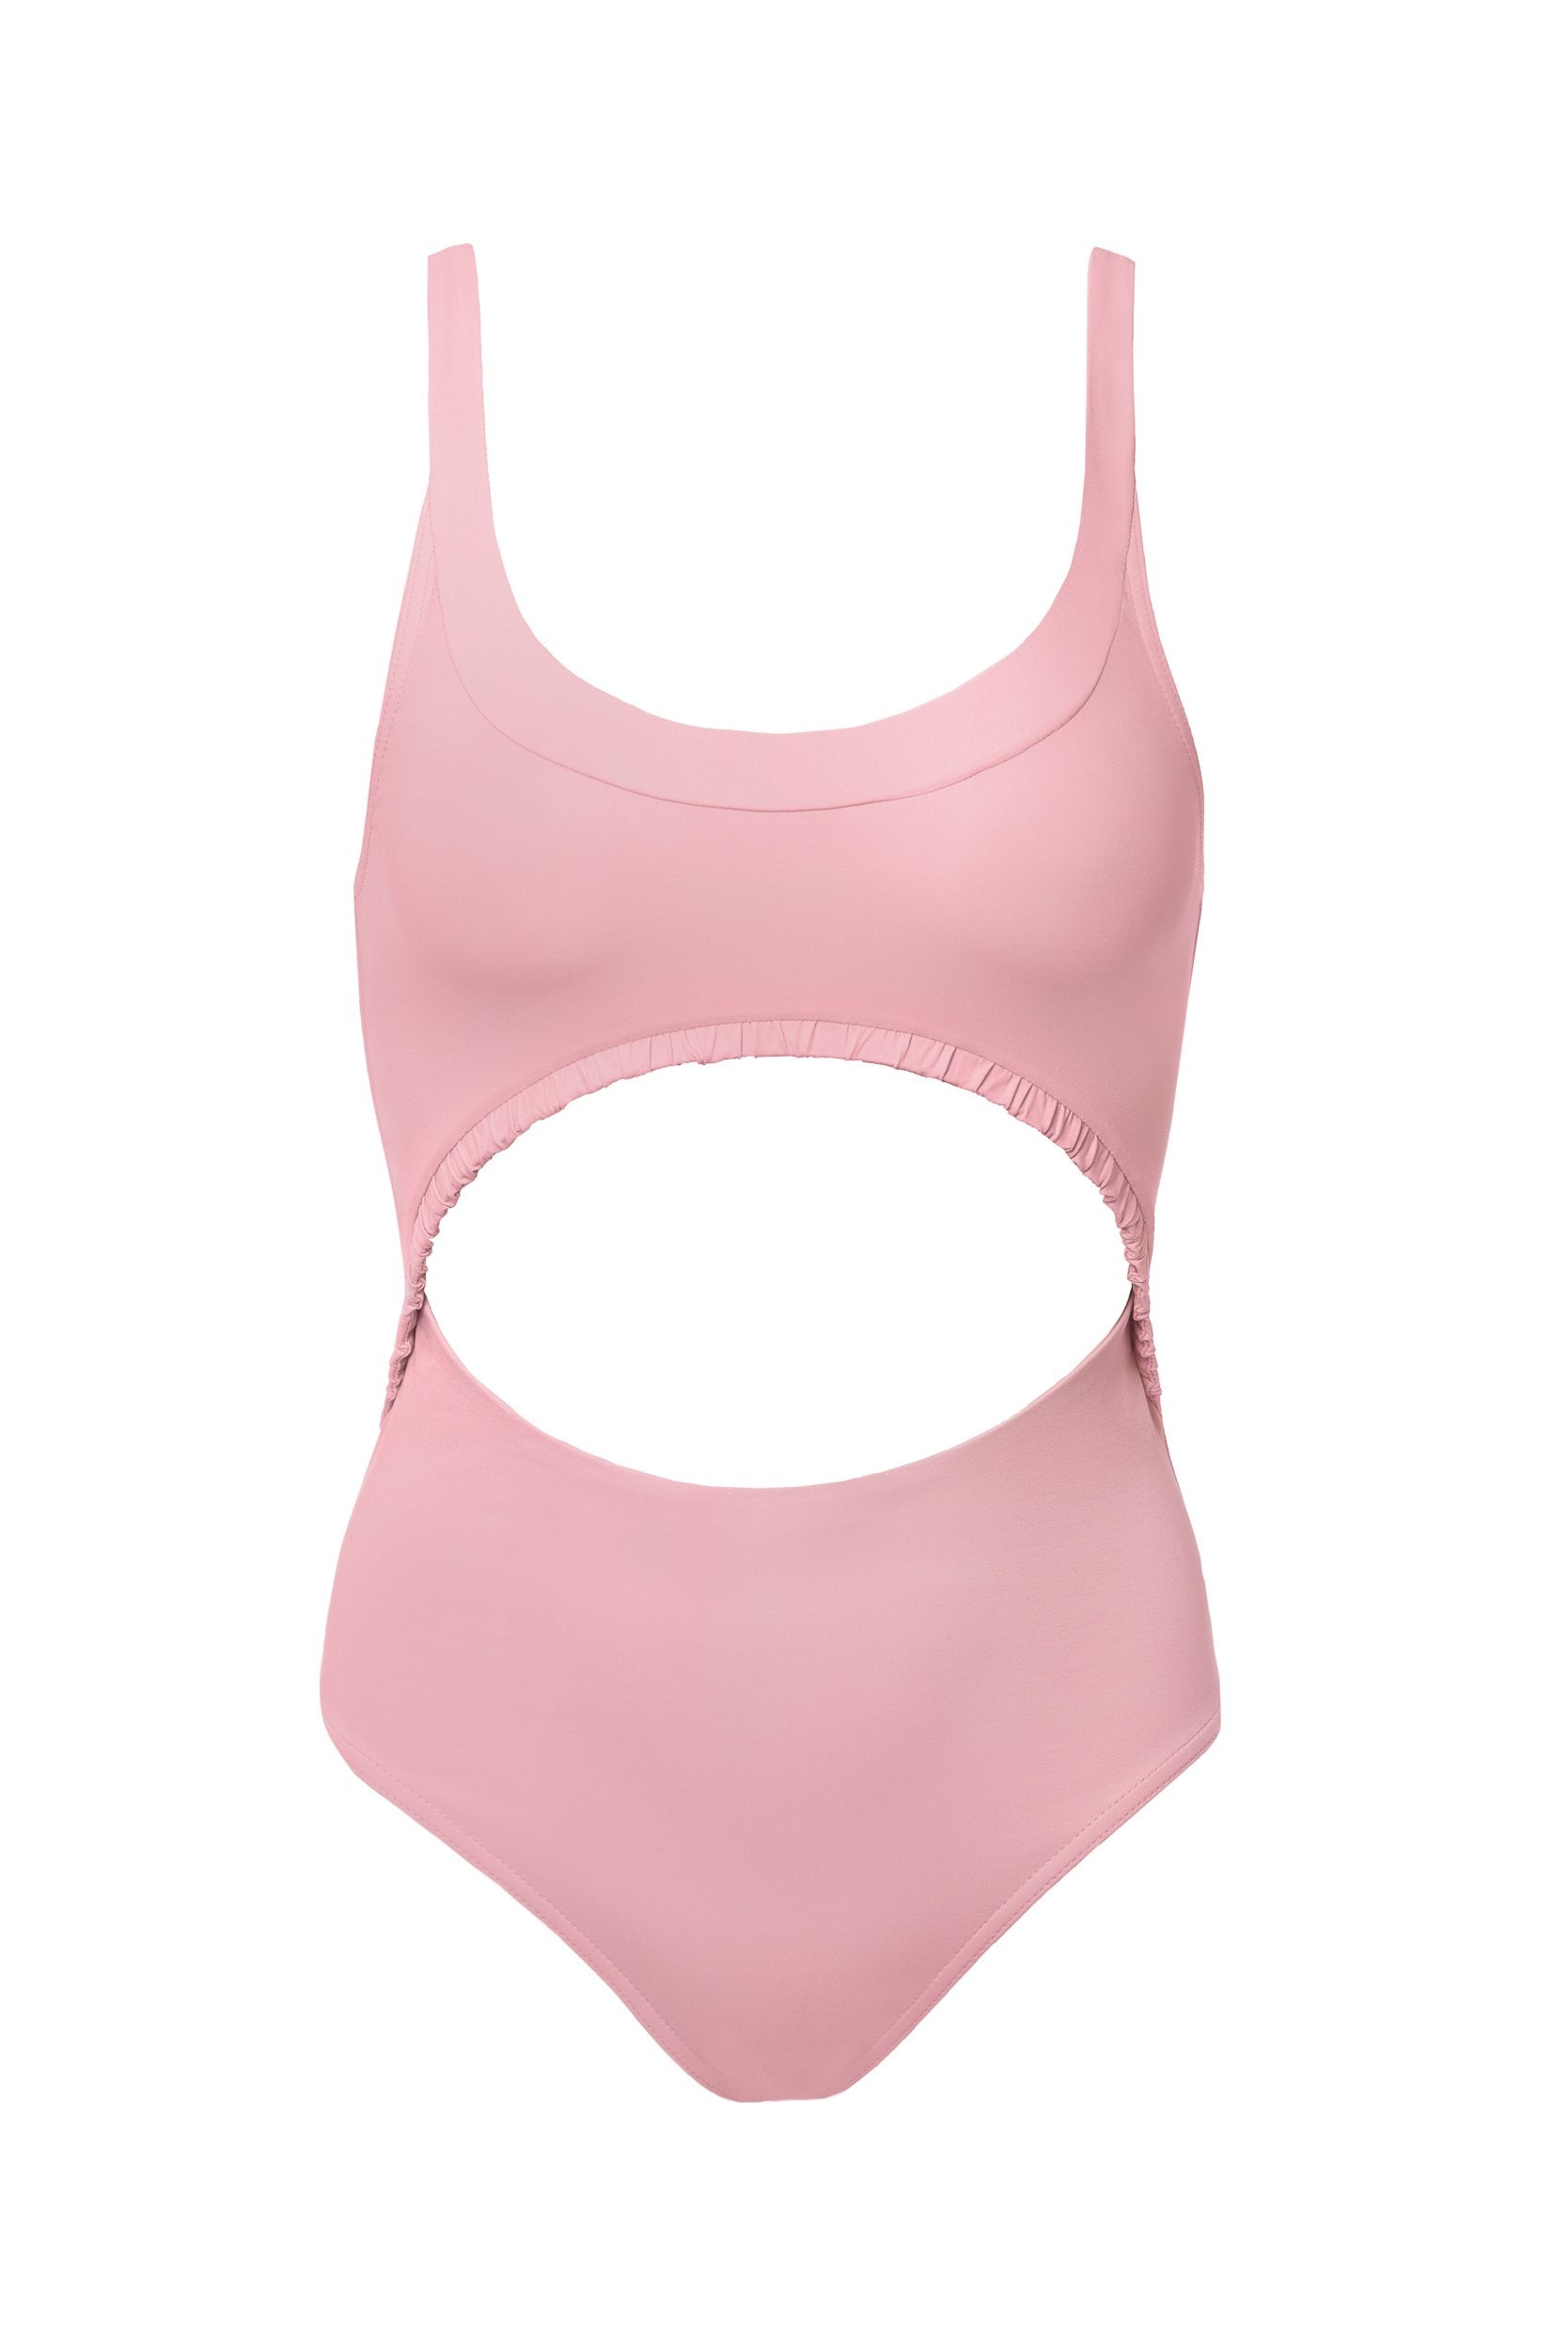 Bonnie in Fasano Pink One-Piece Swimsuit Arloe 